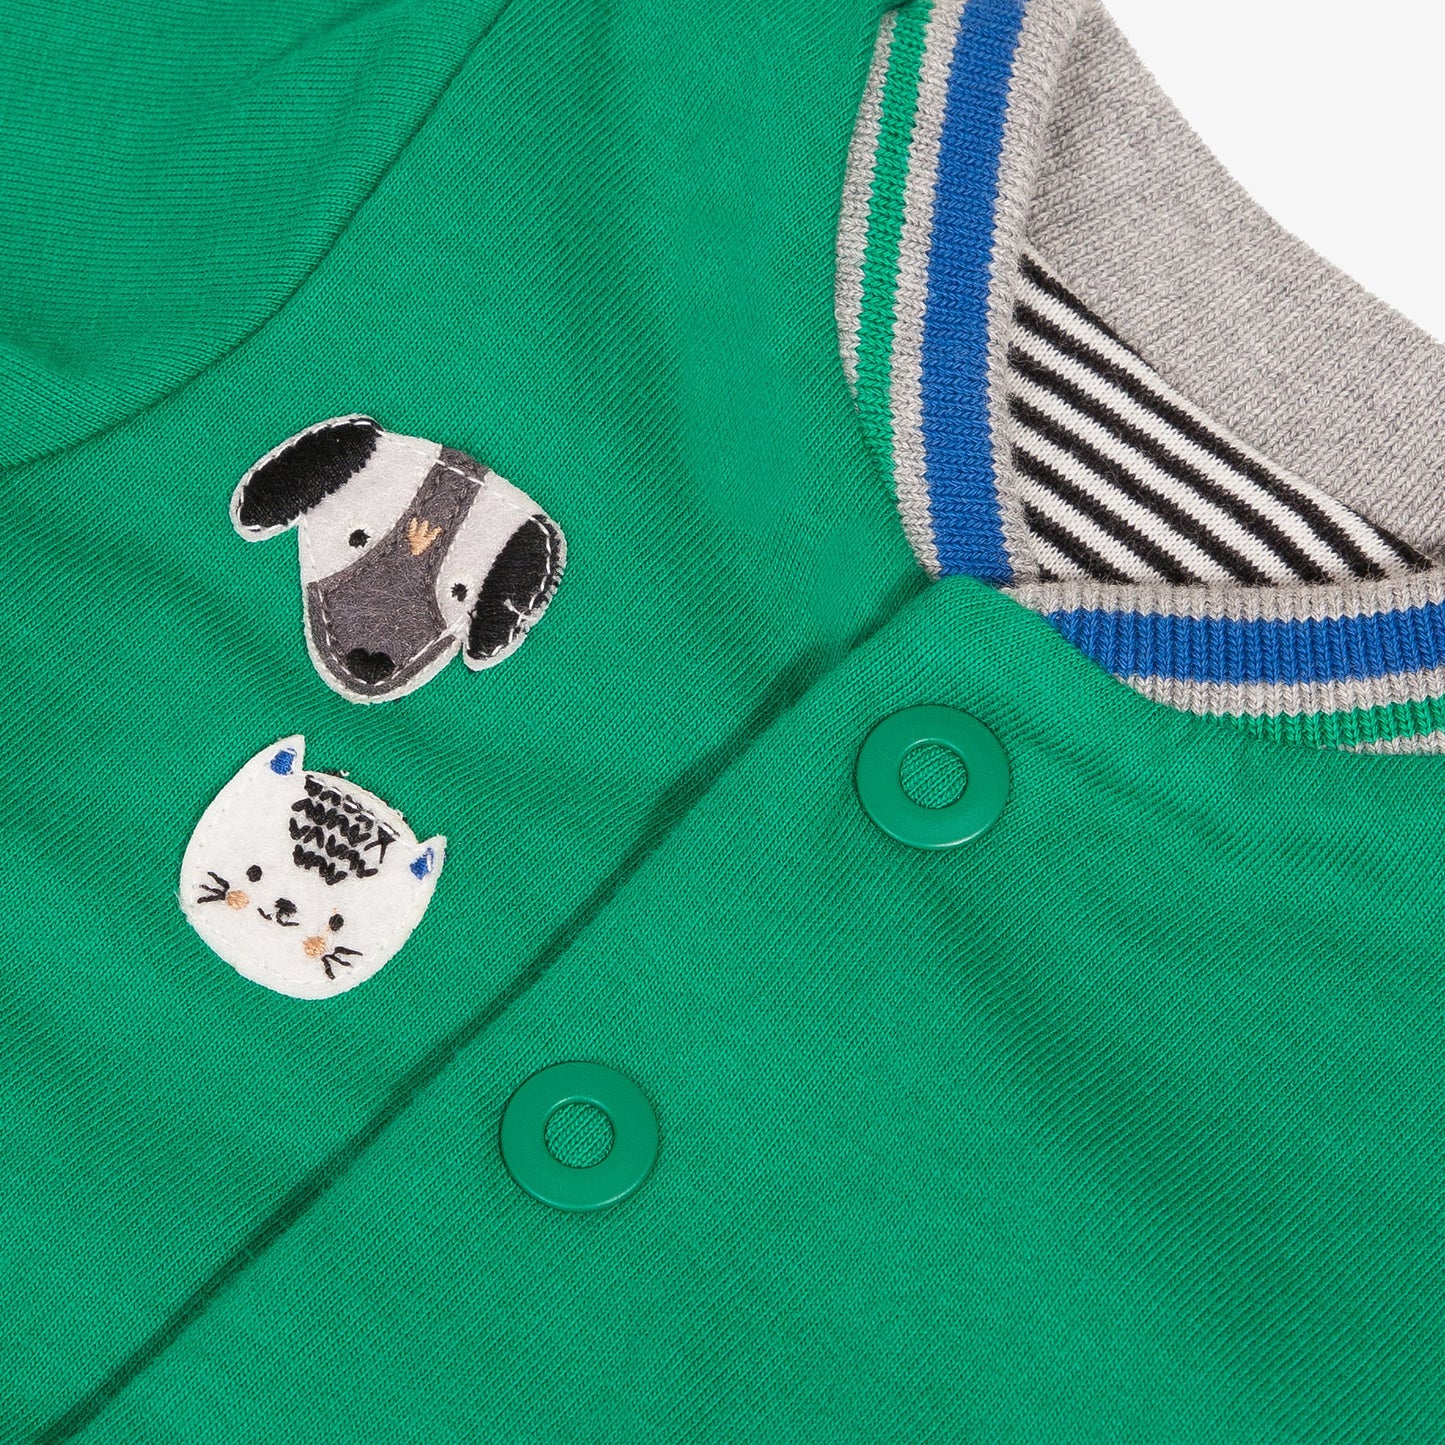 Catimini Baby Boy Green Striped Reversible Jacket (Size 6m, 9m, 12m)